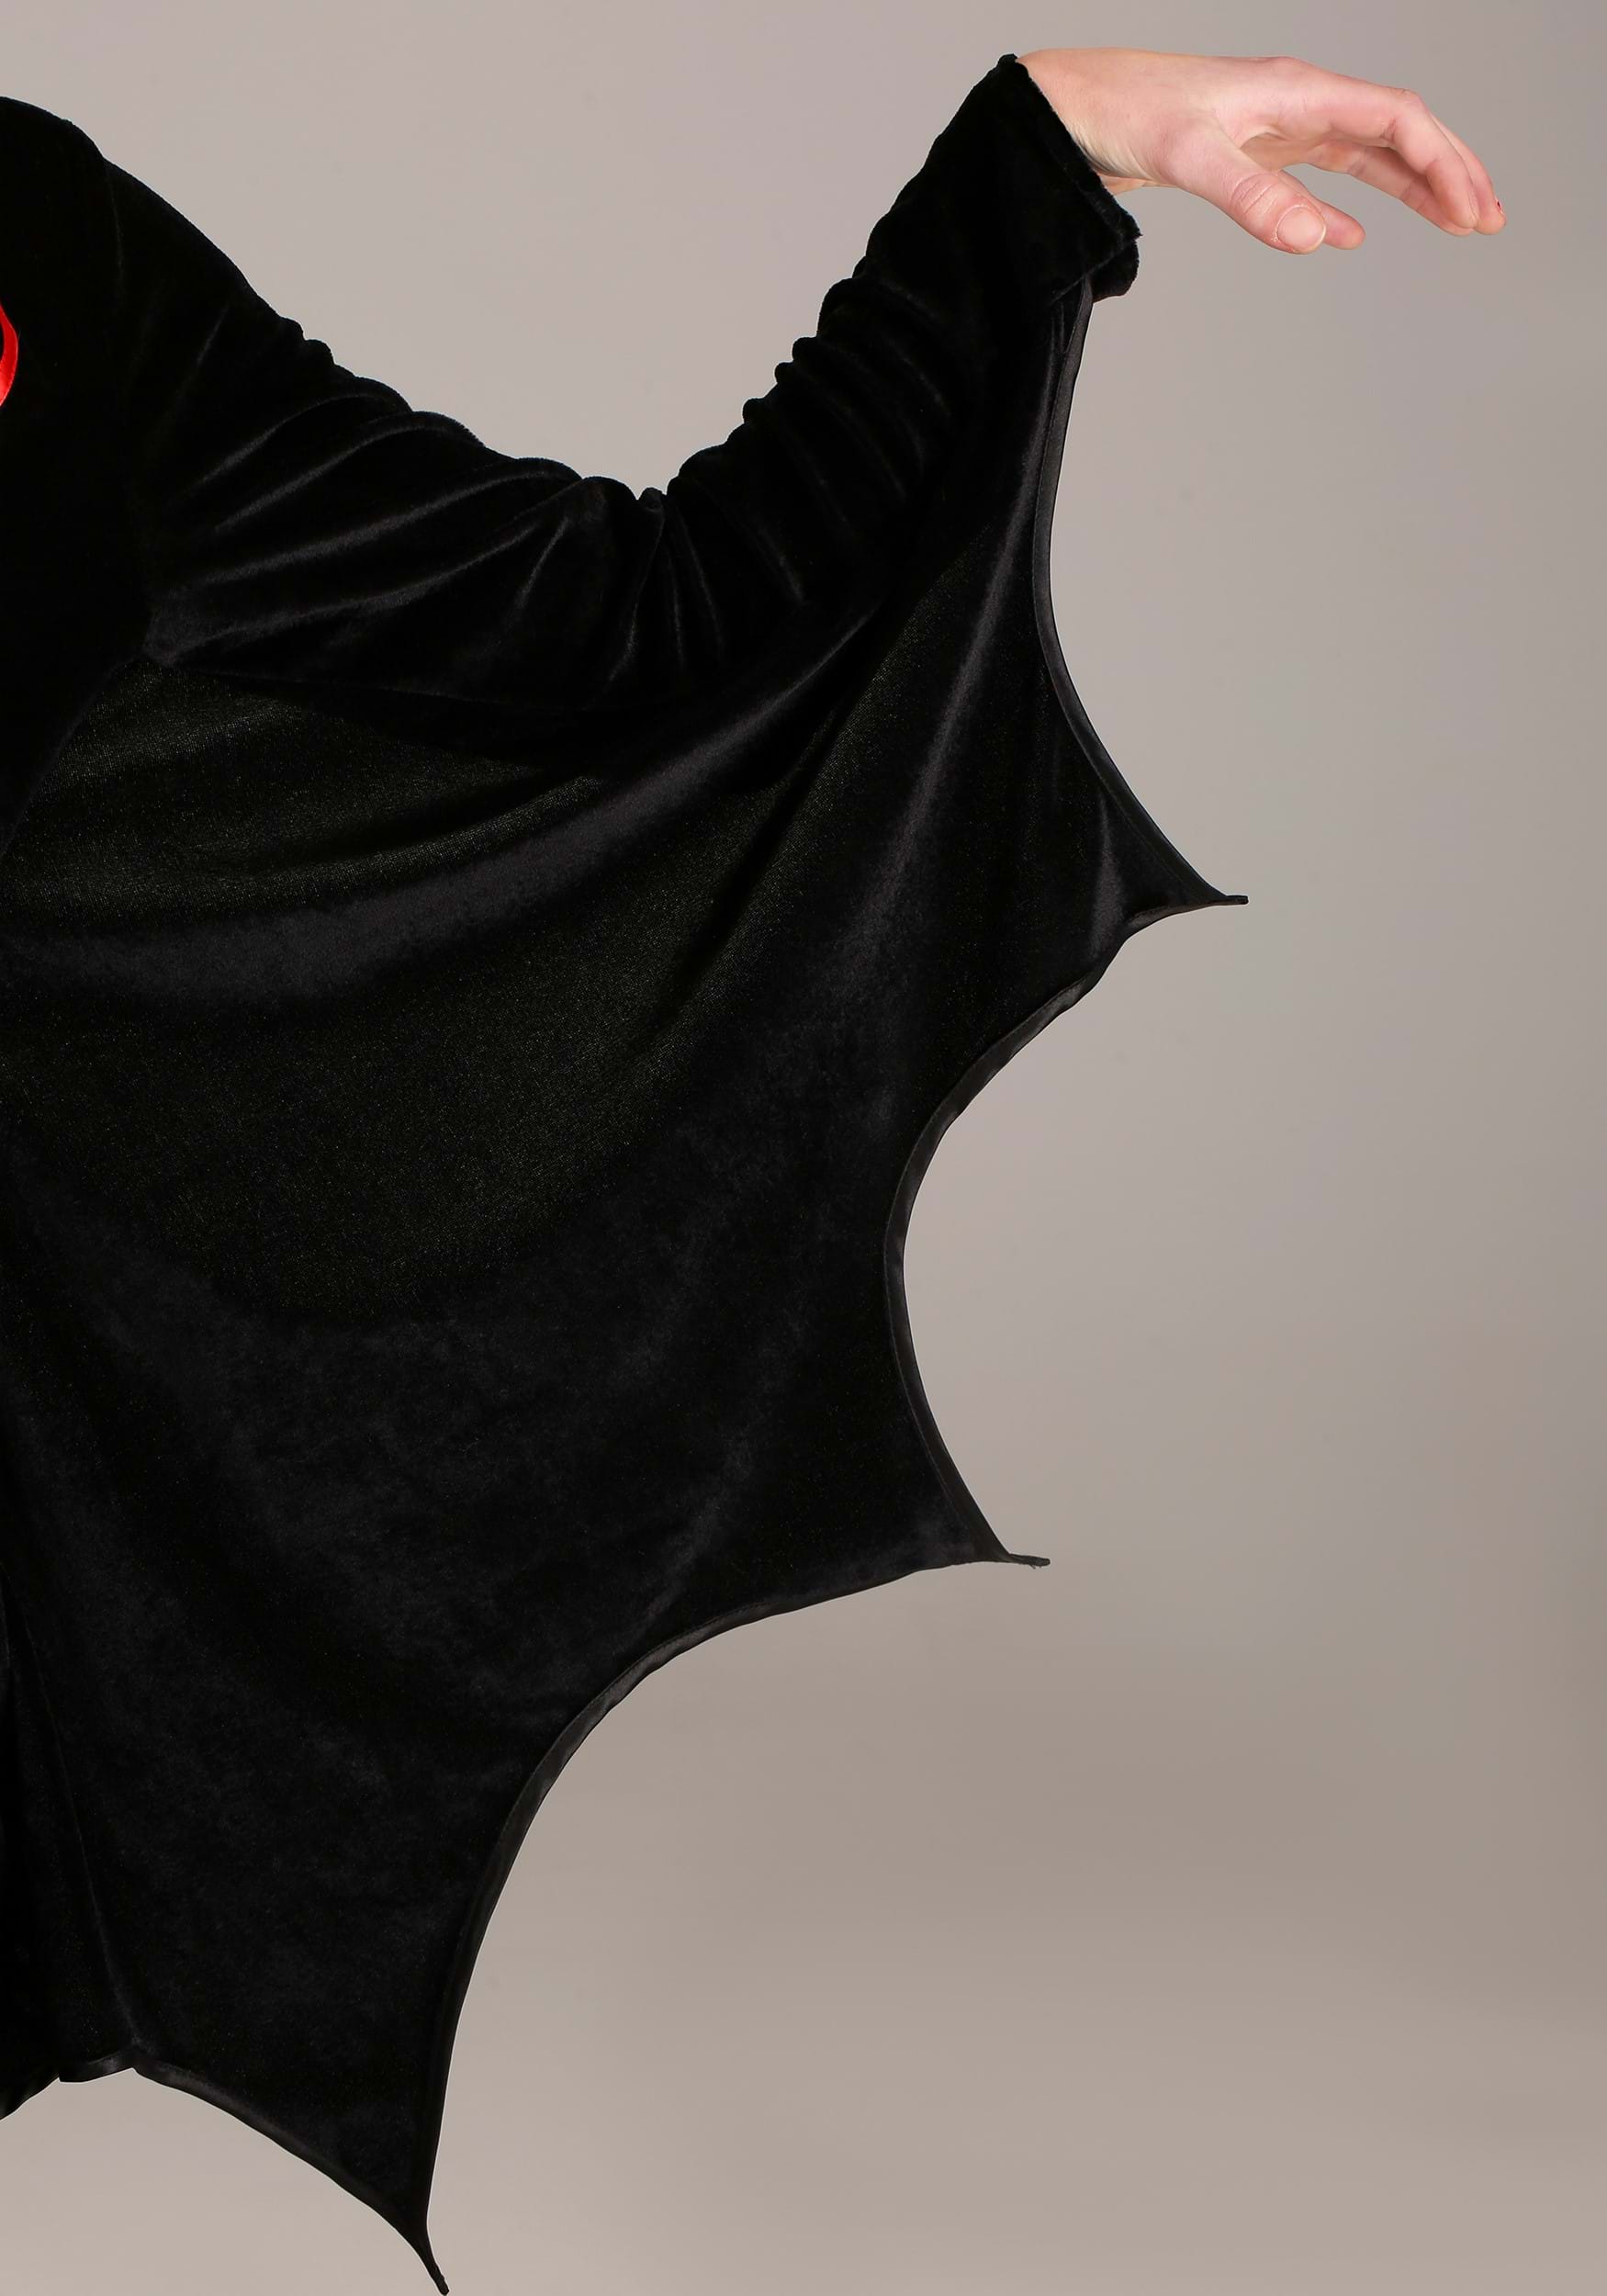 Exclusive Lady Dracula Fancy Dress Costume